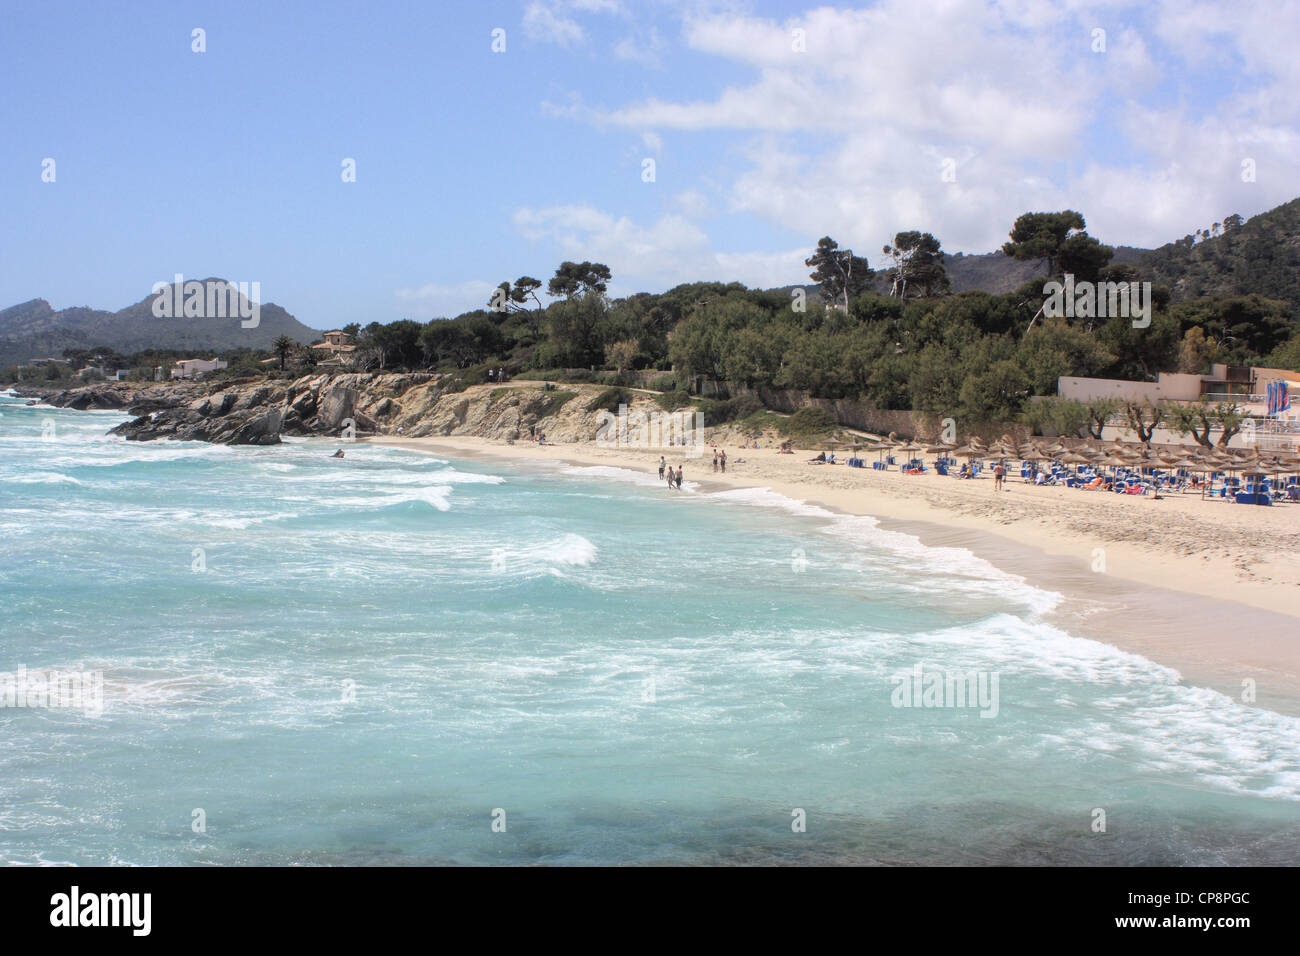 Beach of Cala Rajada, Majorca Island, Spain Stock Photo